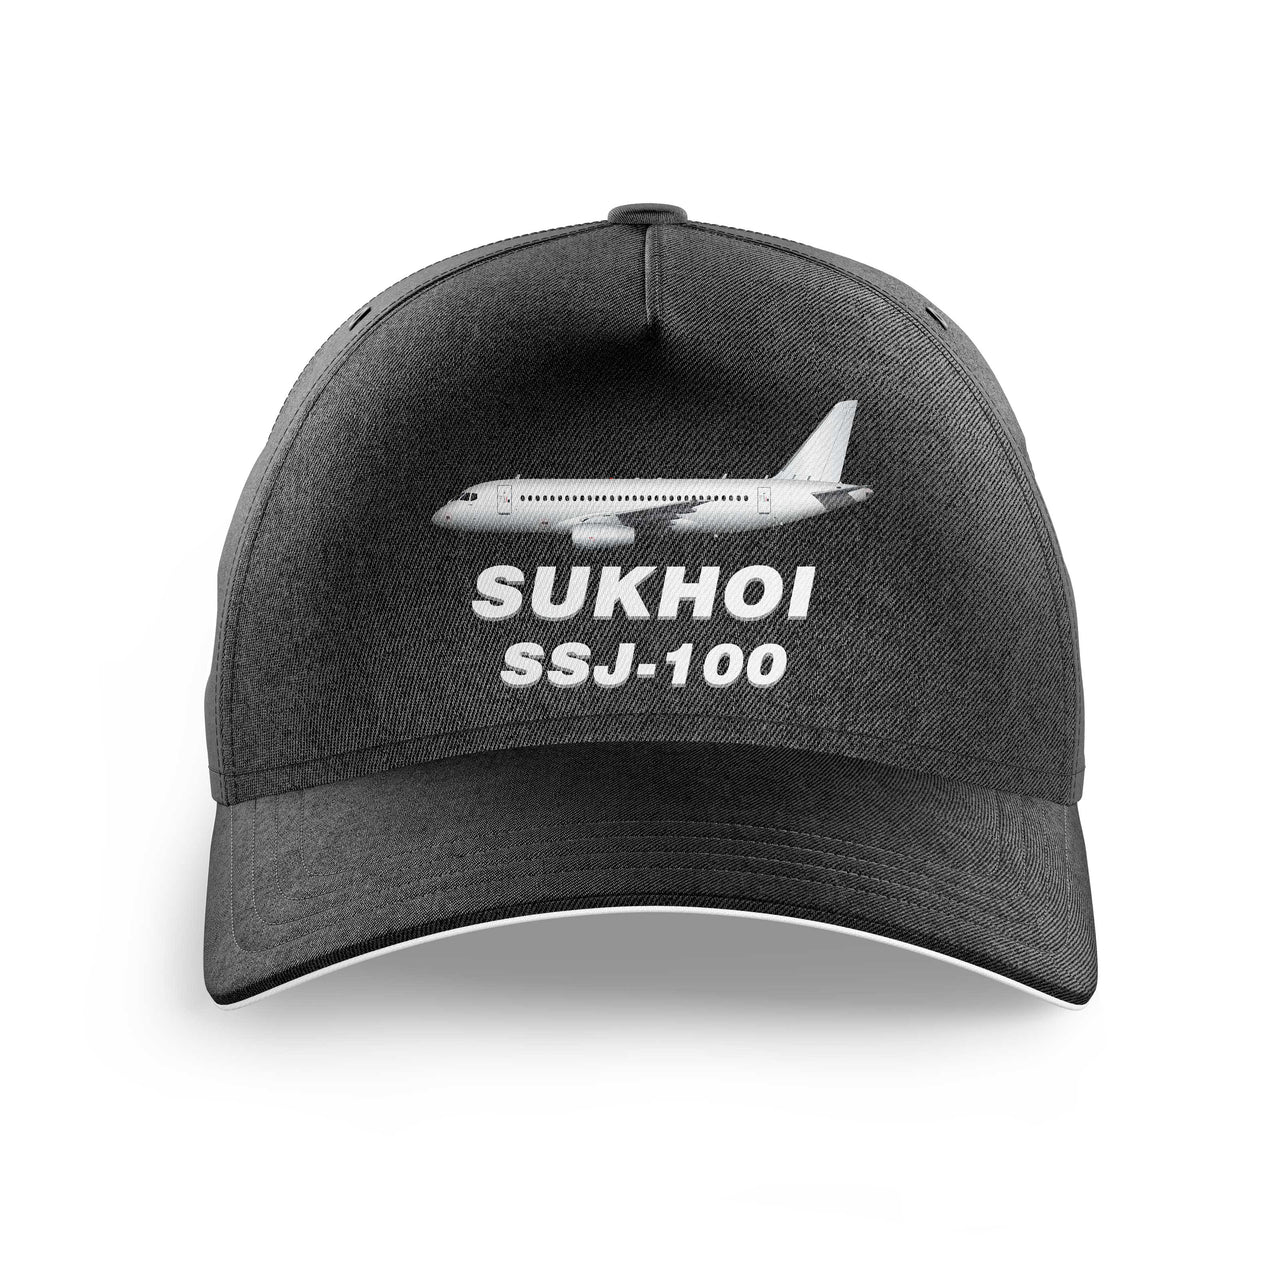 The Sukhoi Superjet 100 Printed Hats